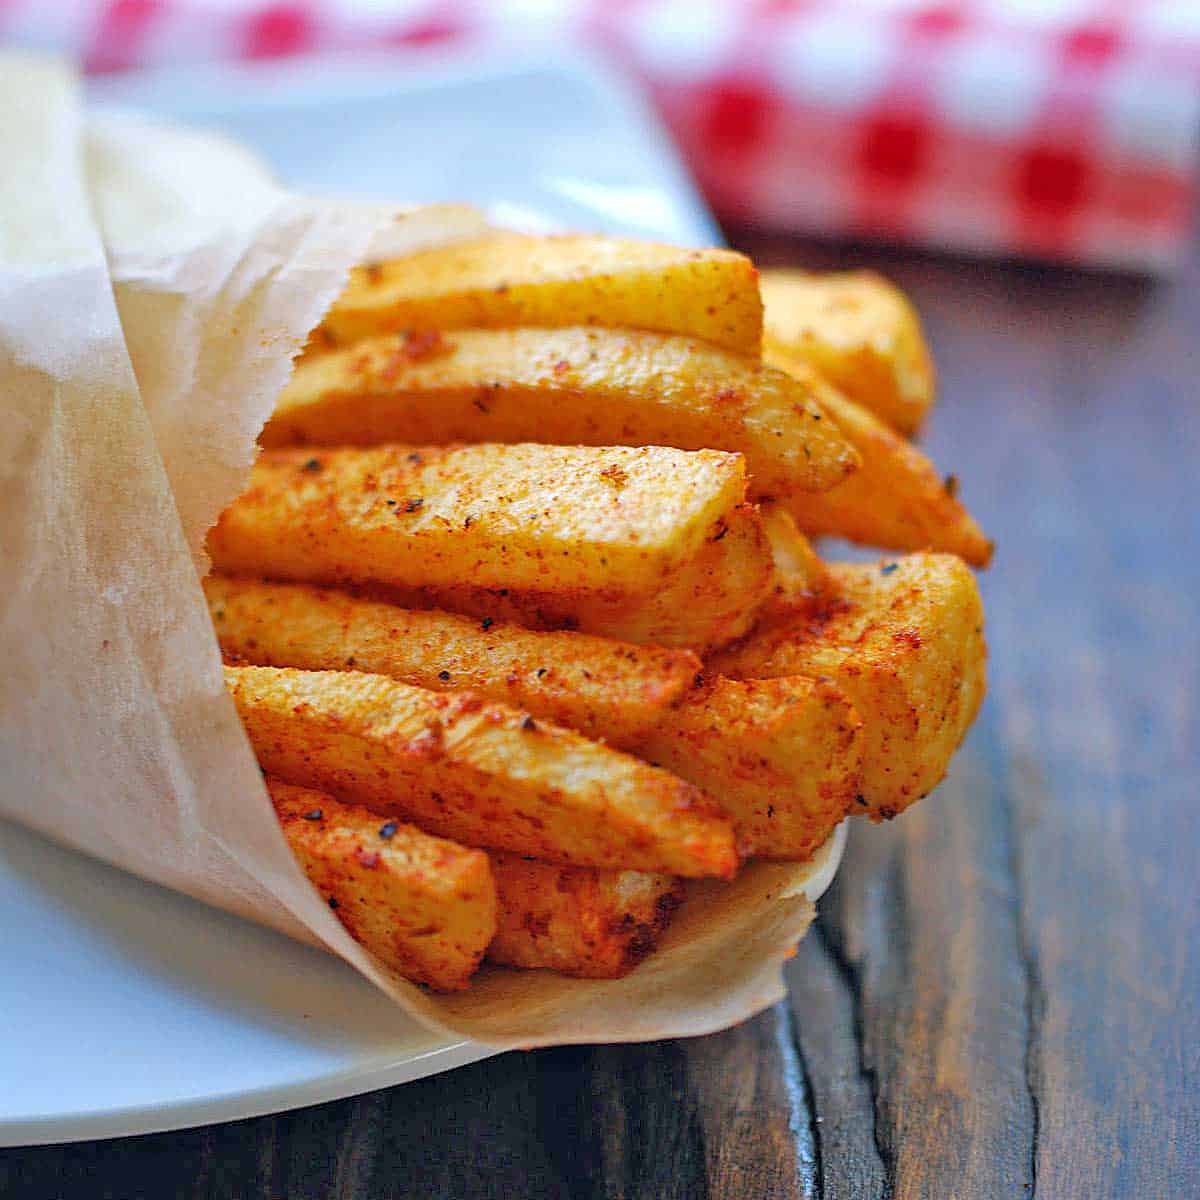 Oven-Baked Jicama Fries - Healthy Recipes Blog